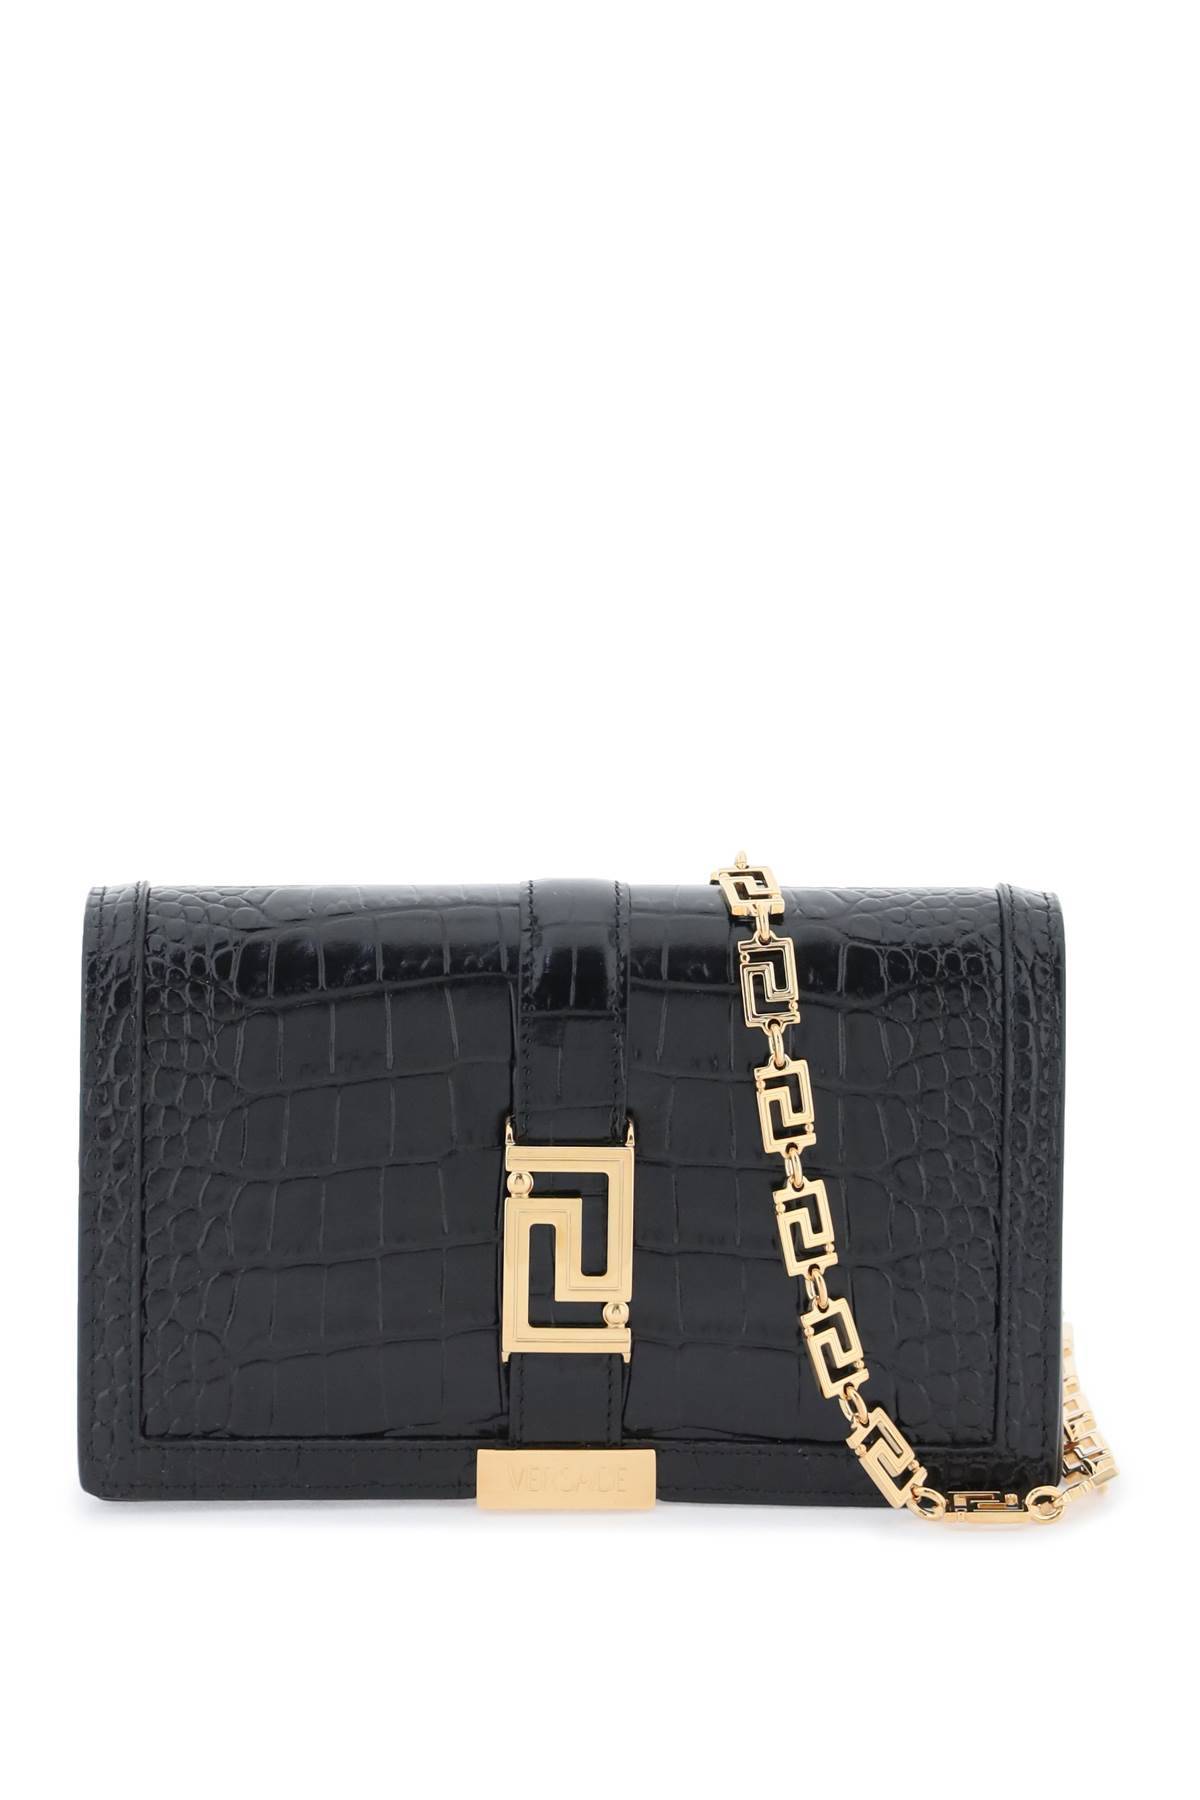 Versace VERSACE croco-embossed leather greca goddes crossbody bag